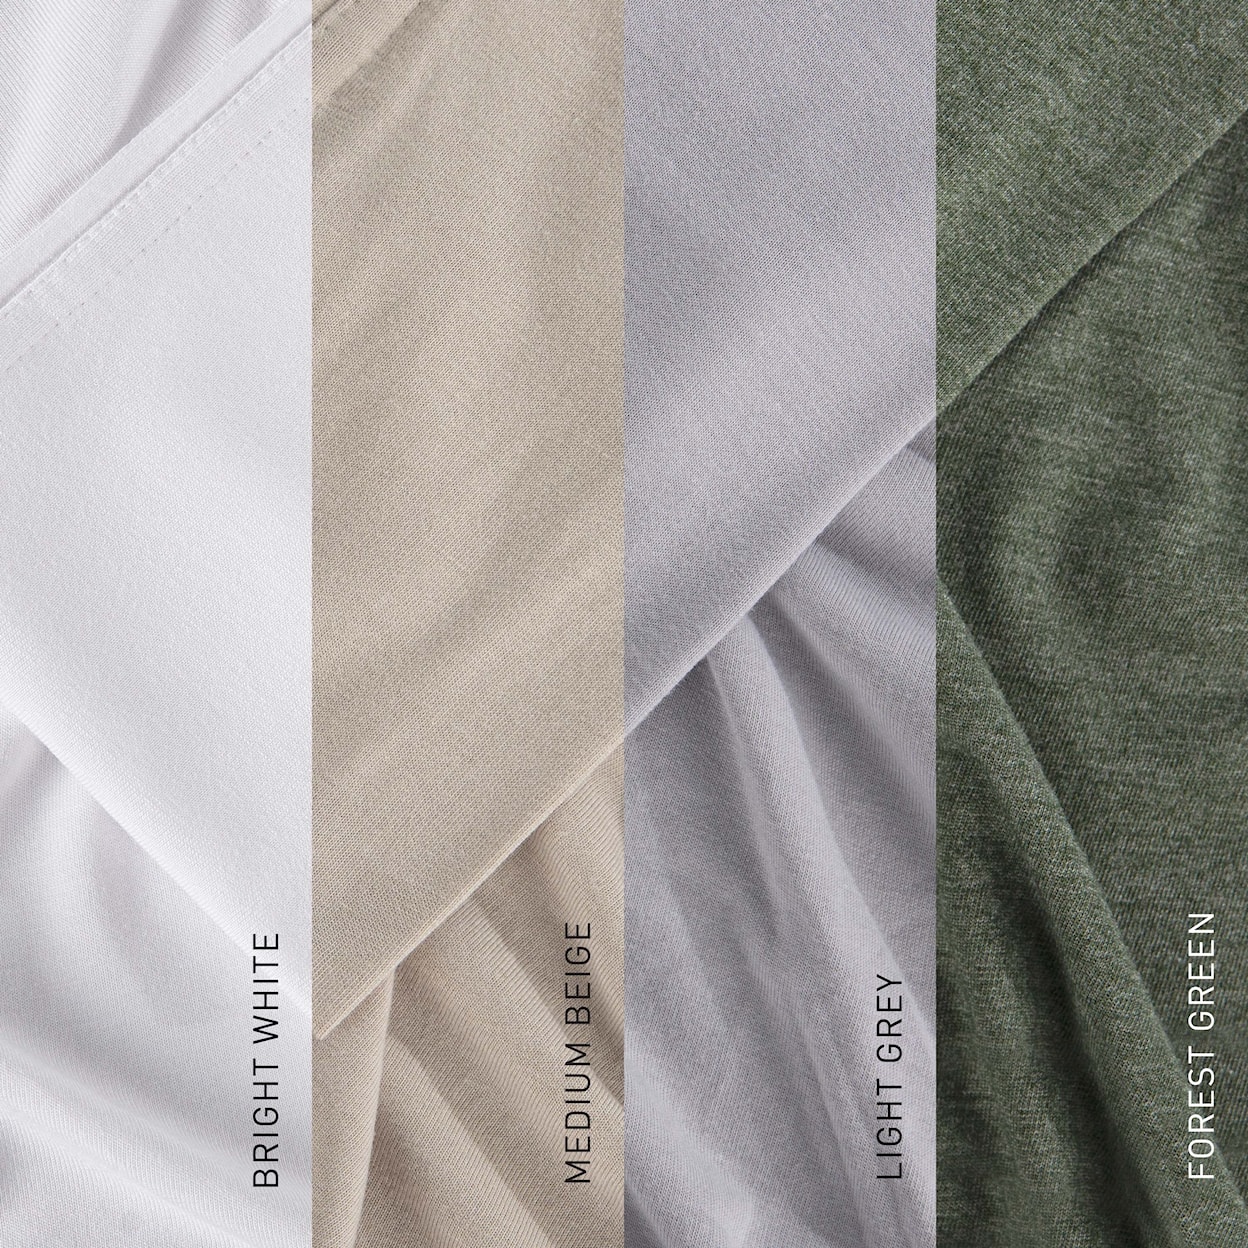 Bedgear Hyper-Wool Sheets Sheet Set,Grey, King/Cal King